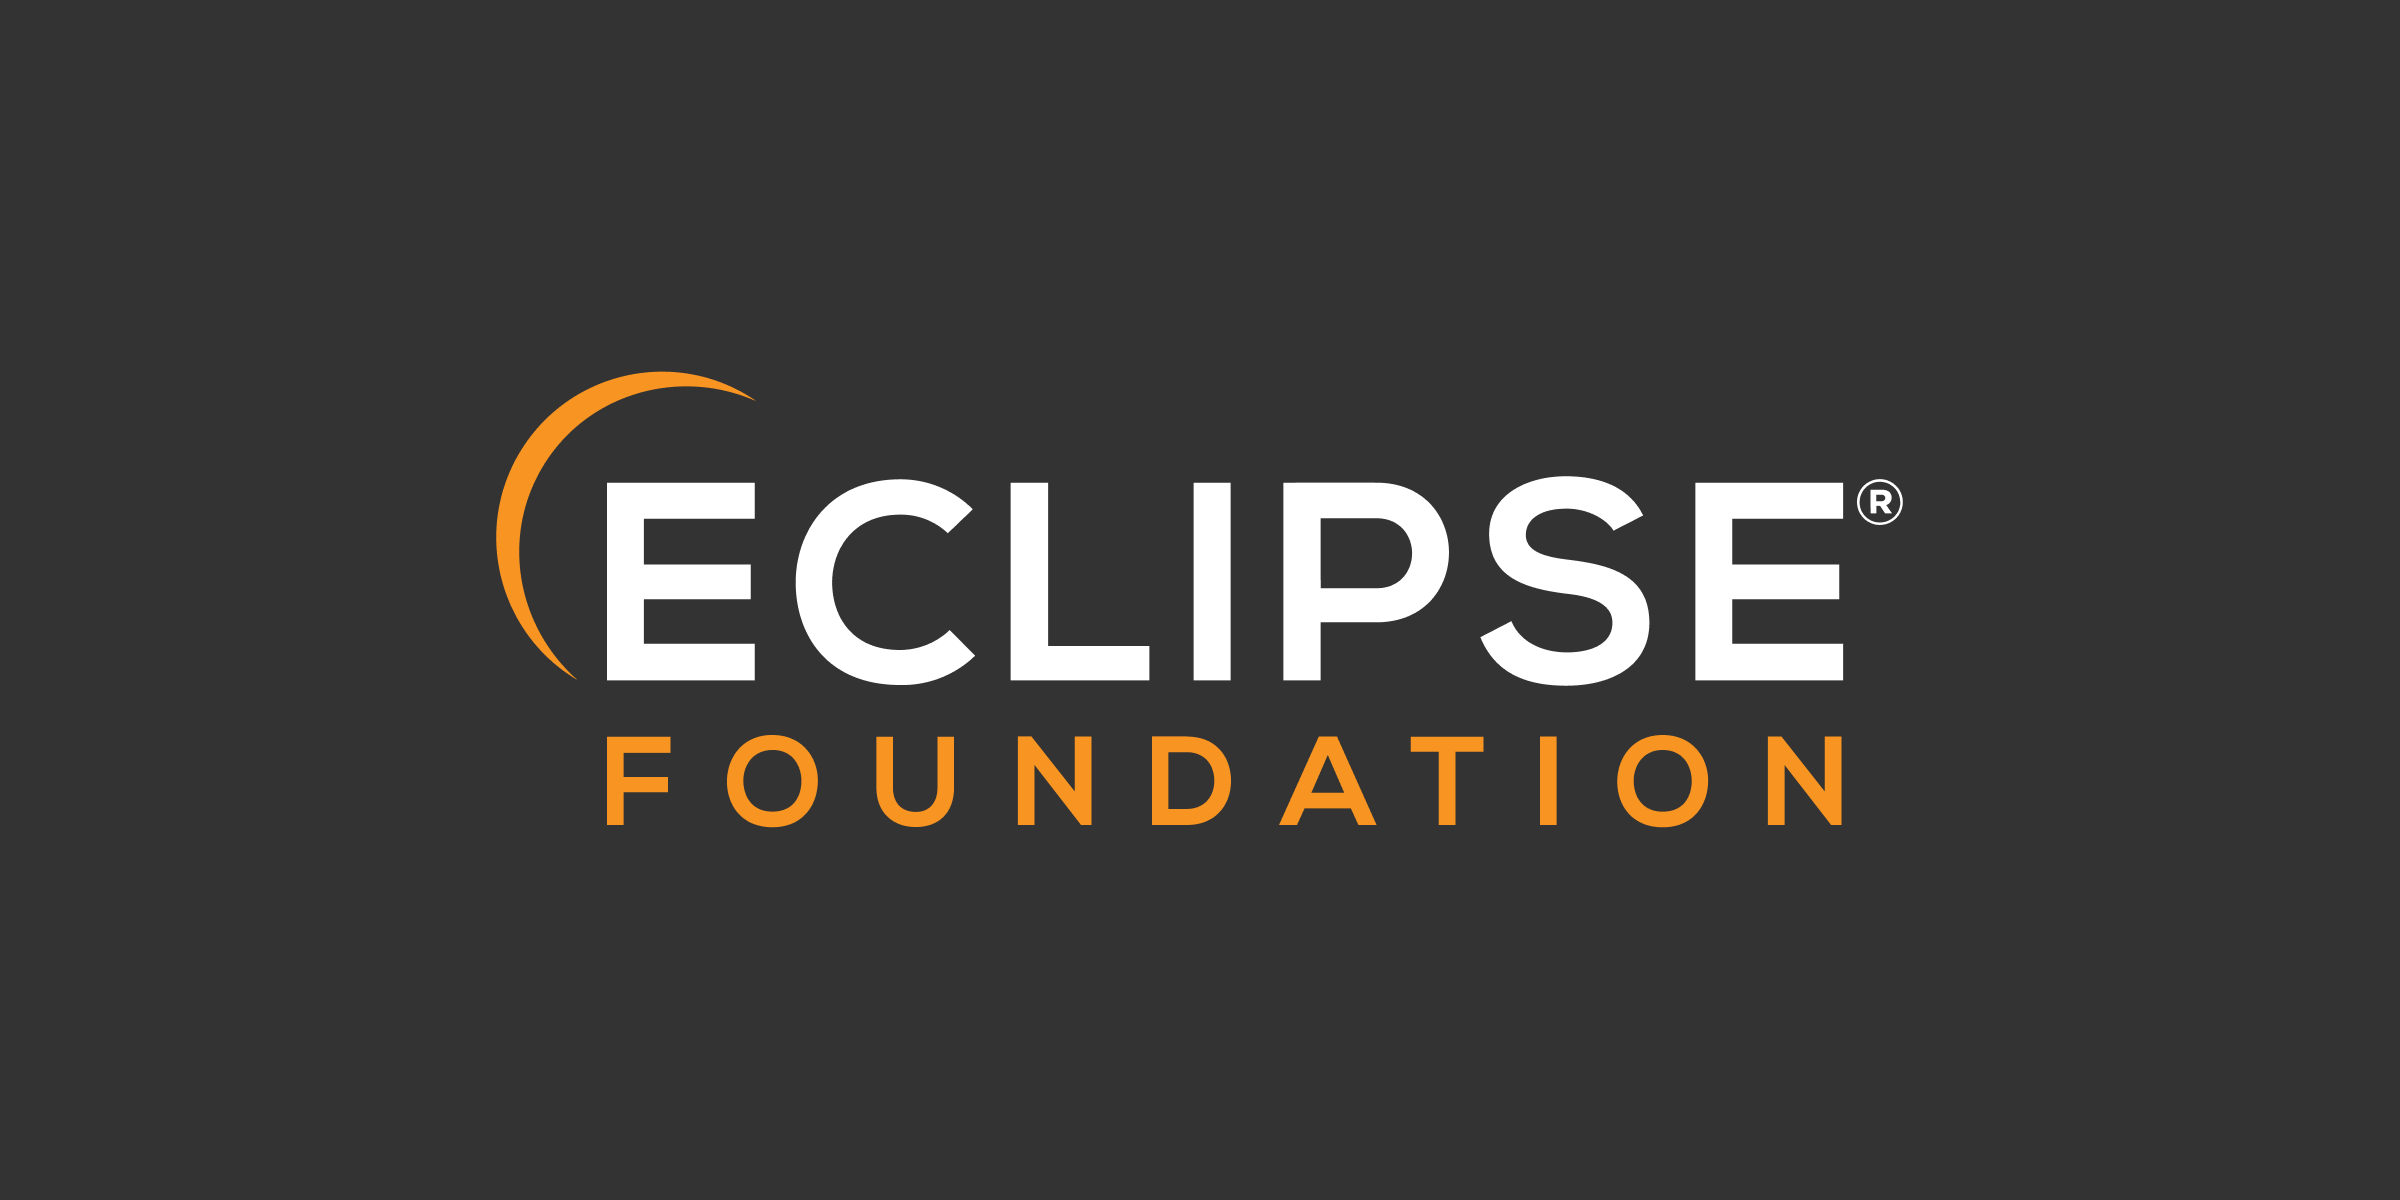 Open Source Software Licenses 101: The Eclipse Public License